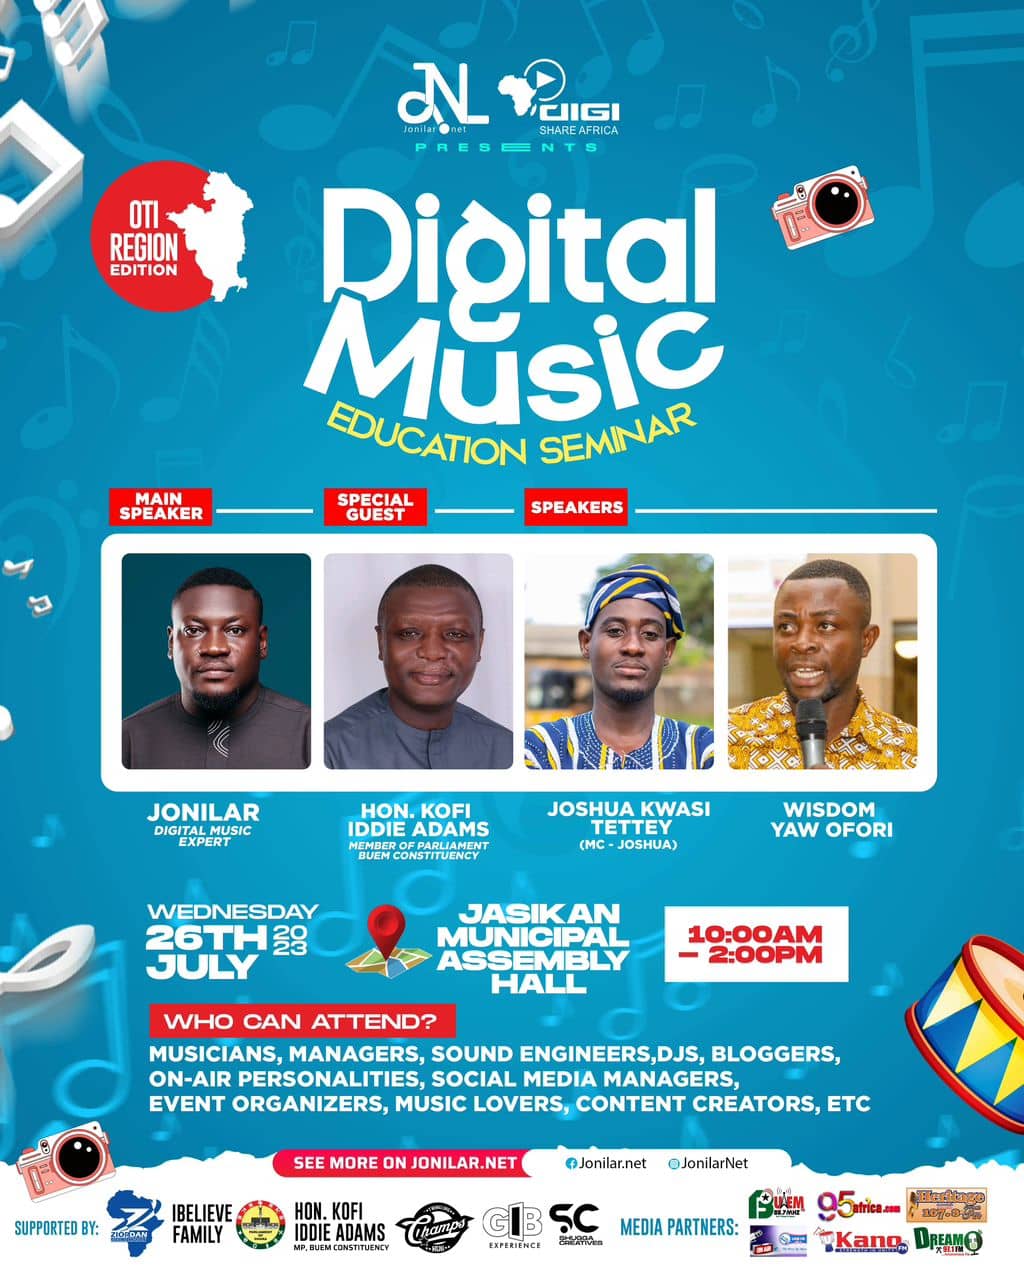 Digital Music Education Seminar